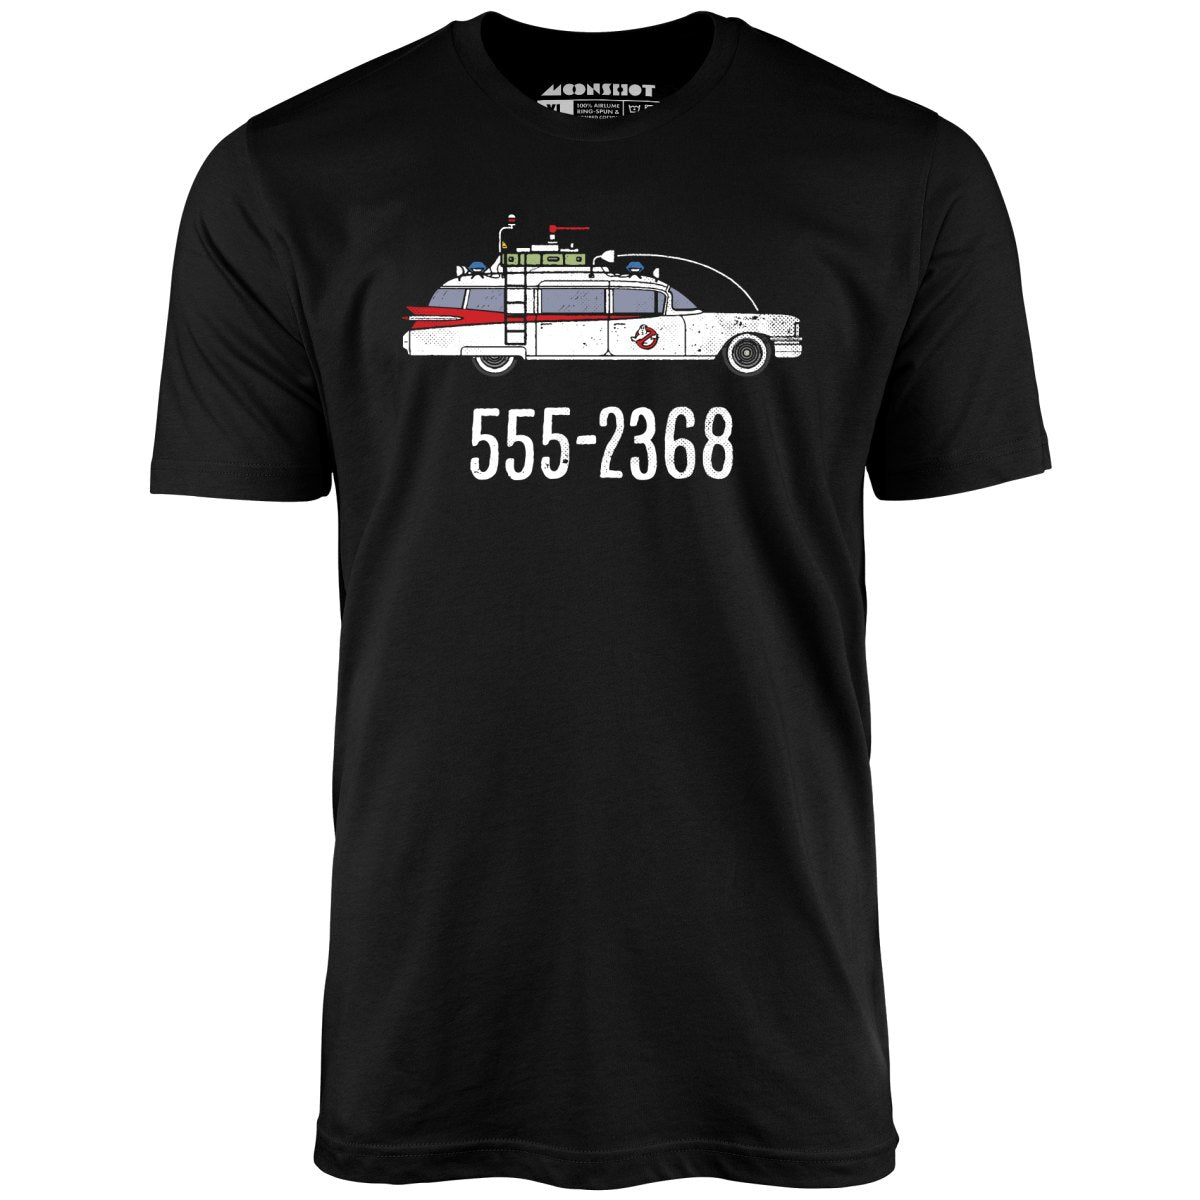 555-2368 - Unisex T-Shirt